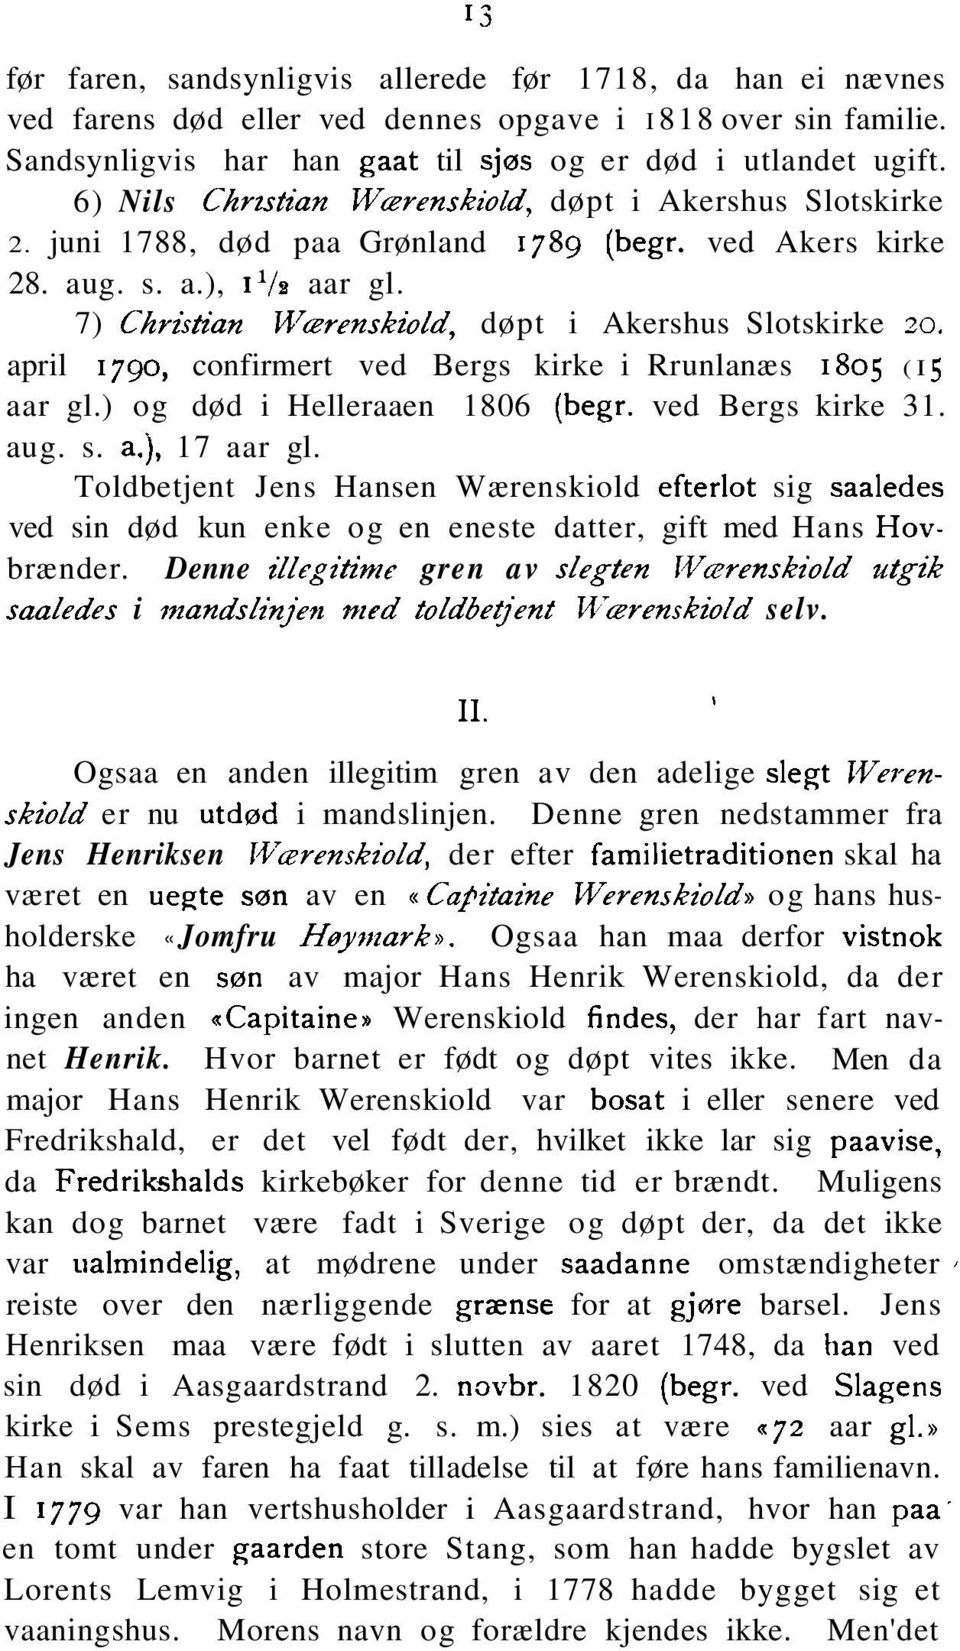 7) Chrishan U'czrenskiold, døpt i Akershus Slotskirke 20. april 1790, confirmert ved Bergs kirke i Rrunlanæs 1805 (I 5 aar gl.) og død i Helleraaen 1806 (begr. ved Bergs kirke 31. aug. s. a.j, 17 aar gl.